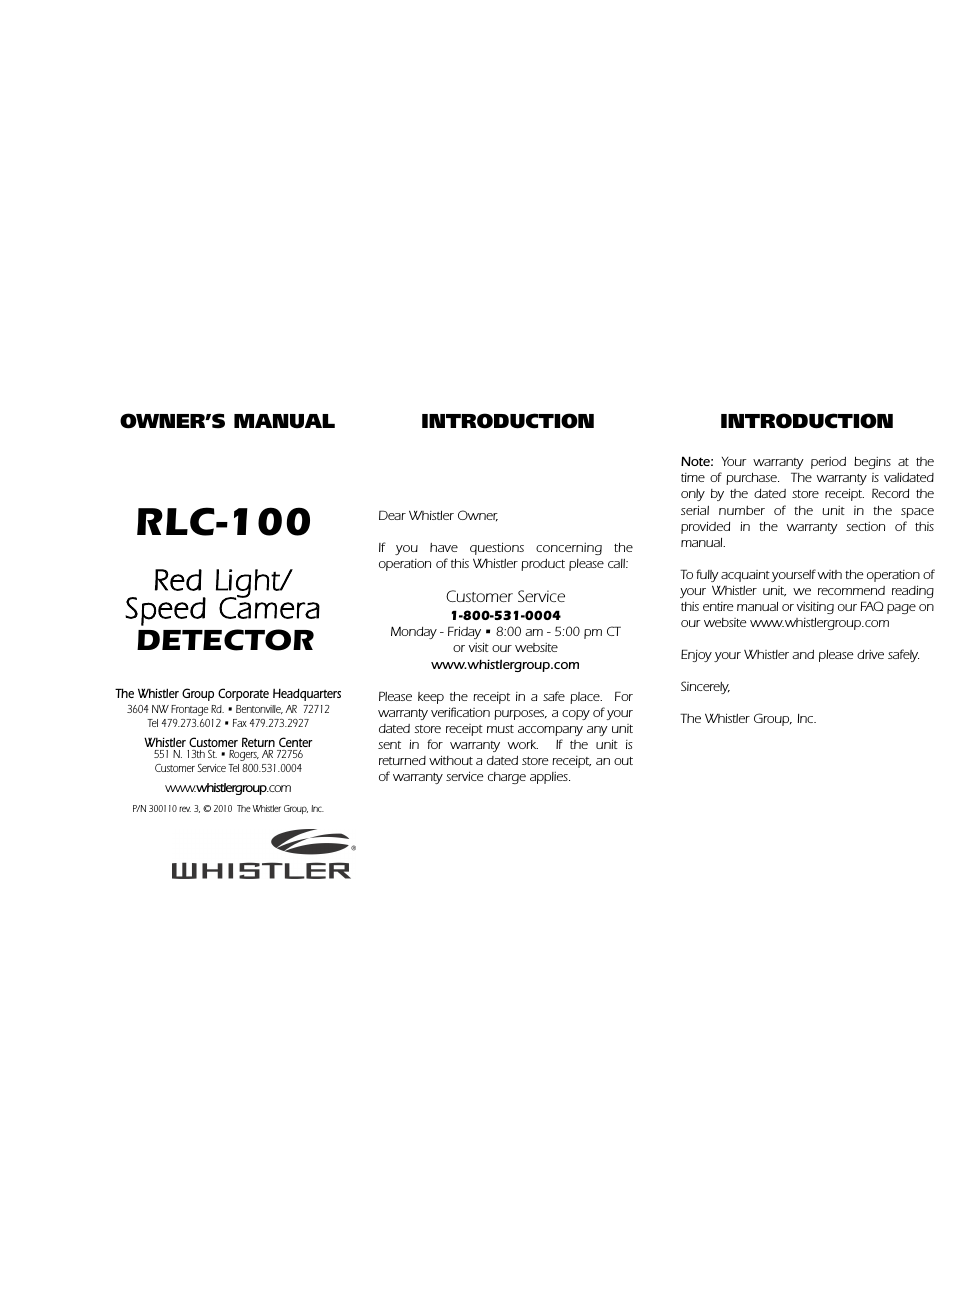 RED LIGHT/ SPEED CAMERA DETECTOR RLC-100